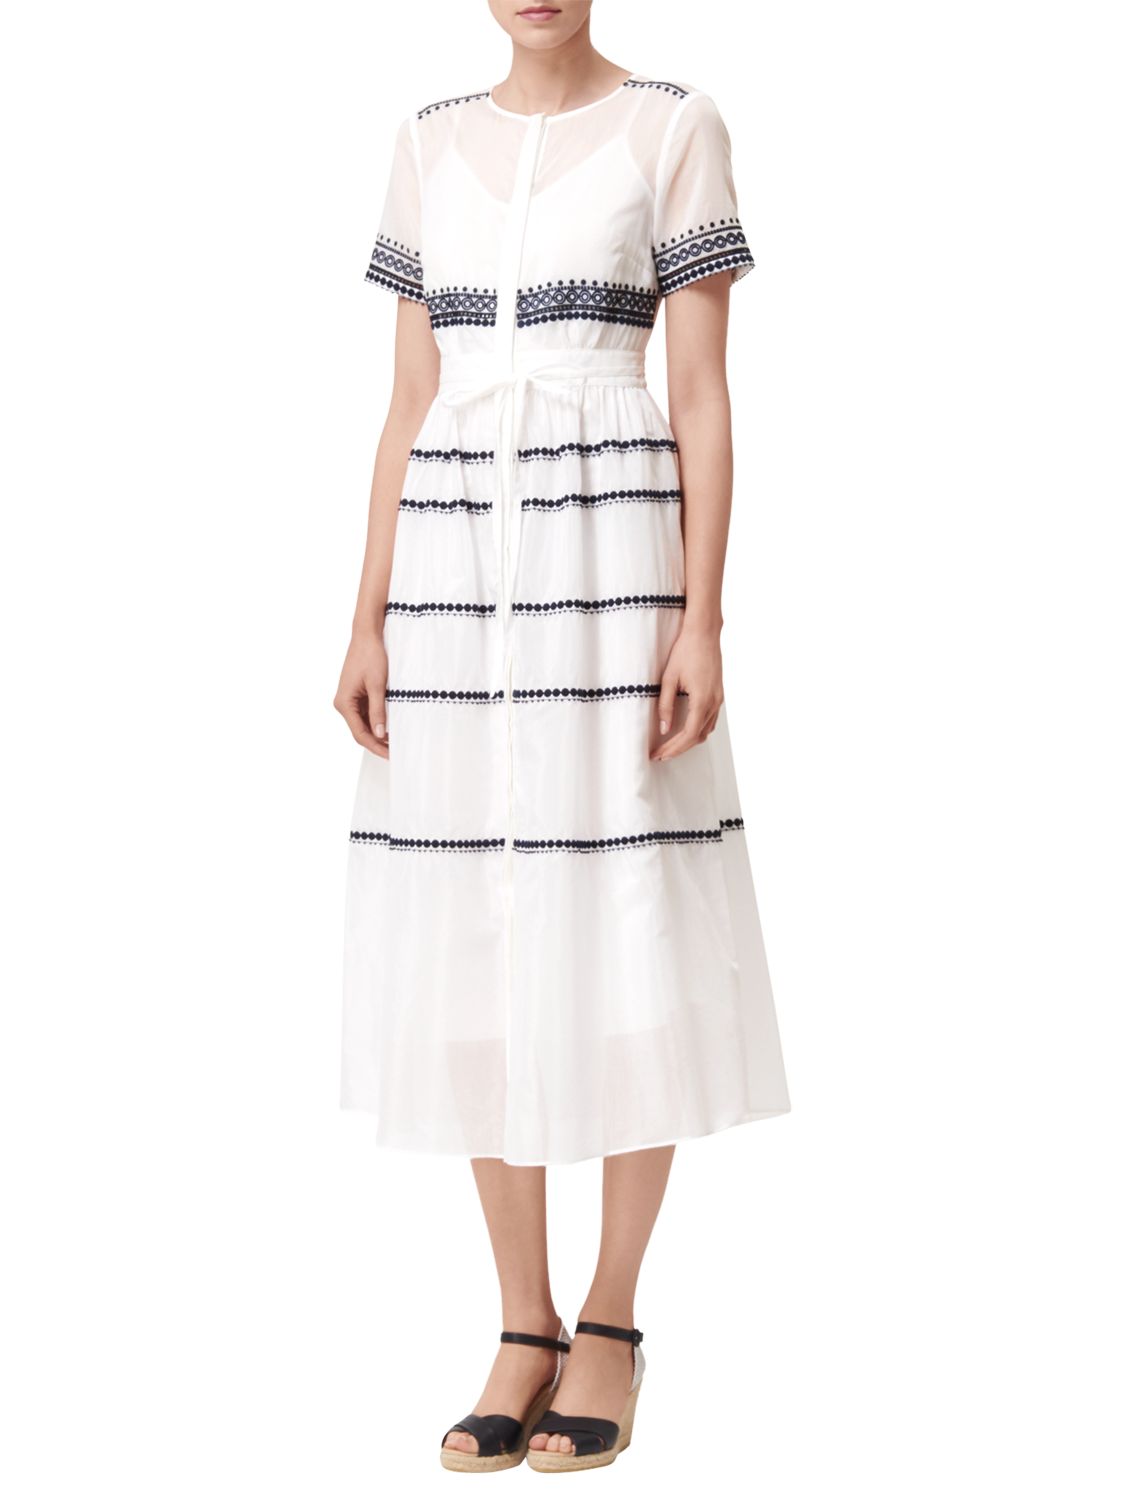 L.K. Bennett Tarley Embroidered Dress, Cream, 18